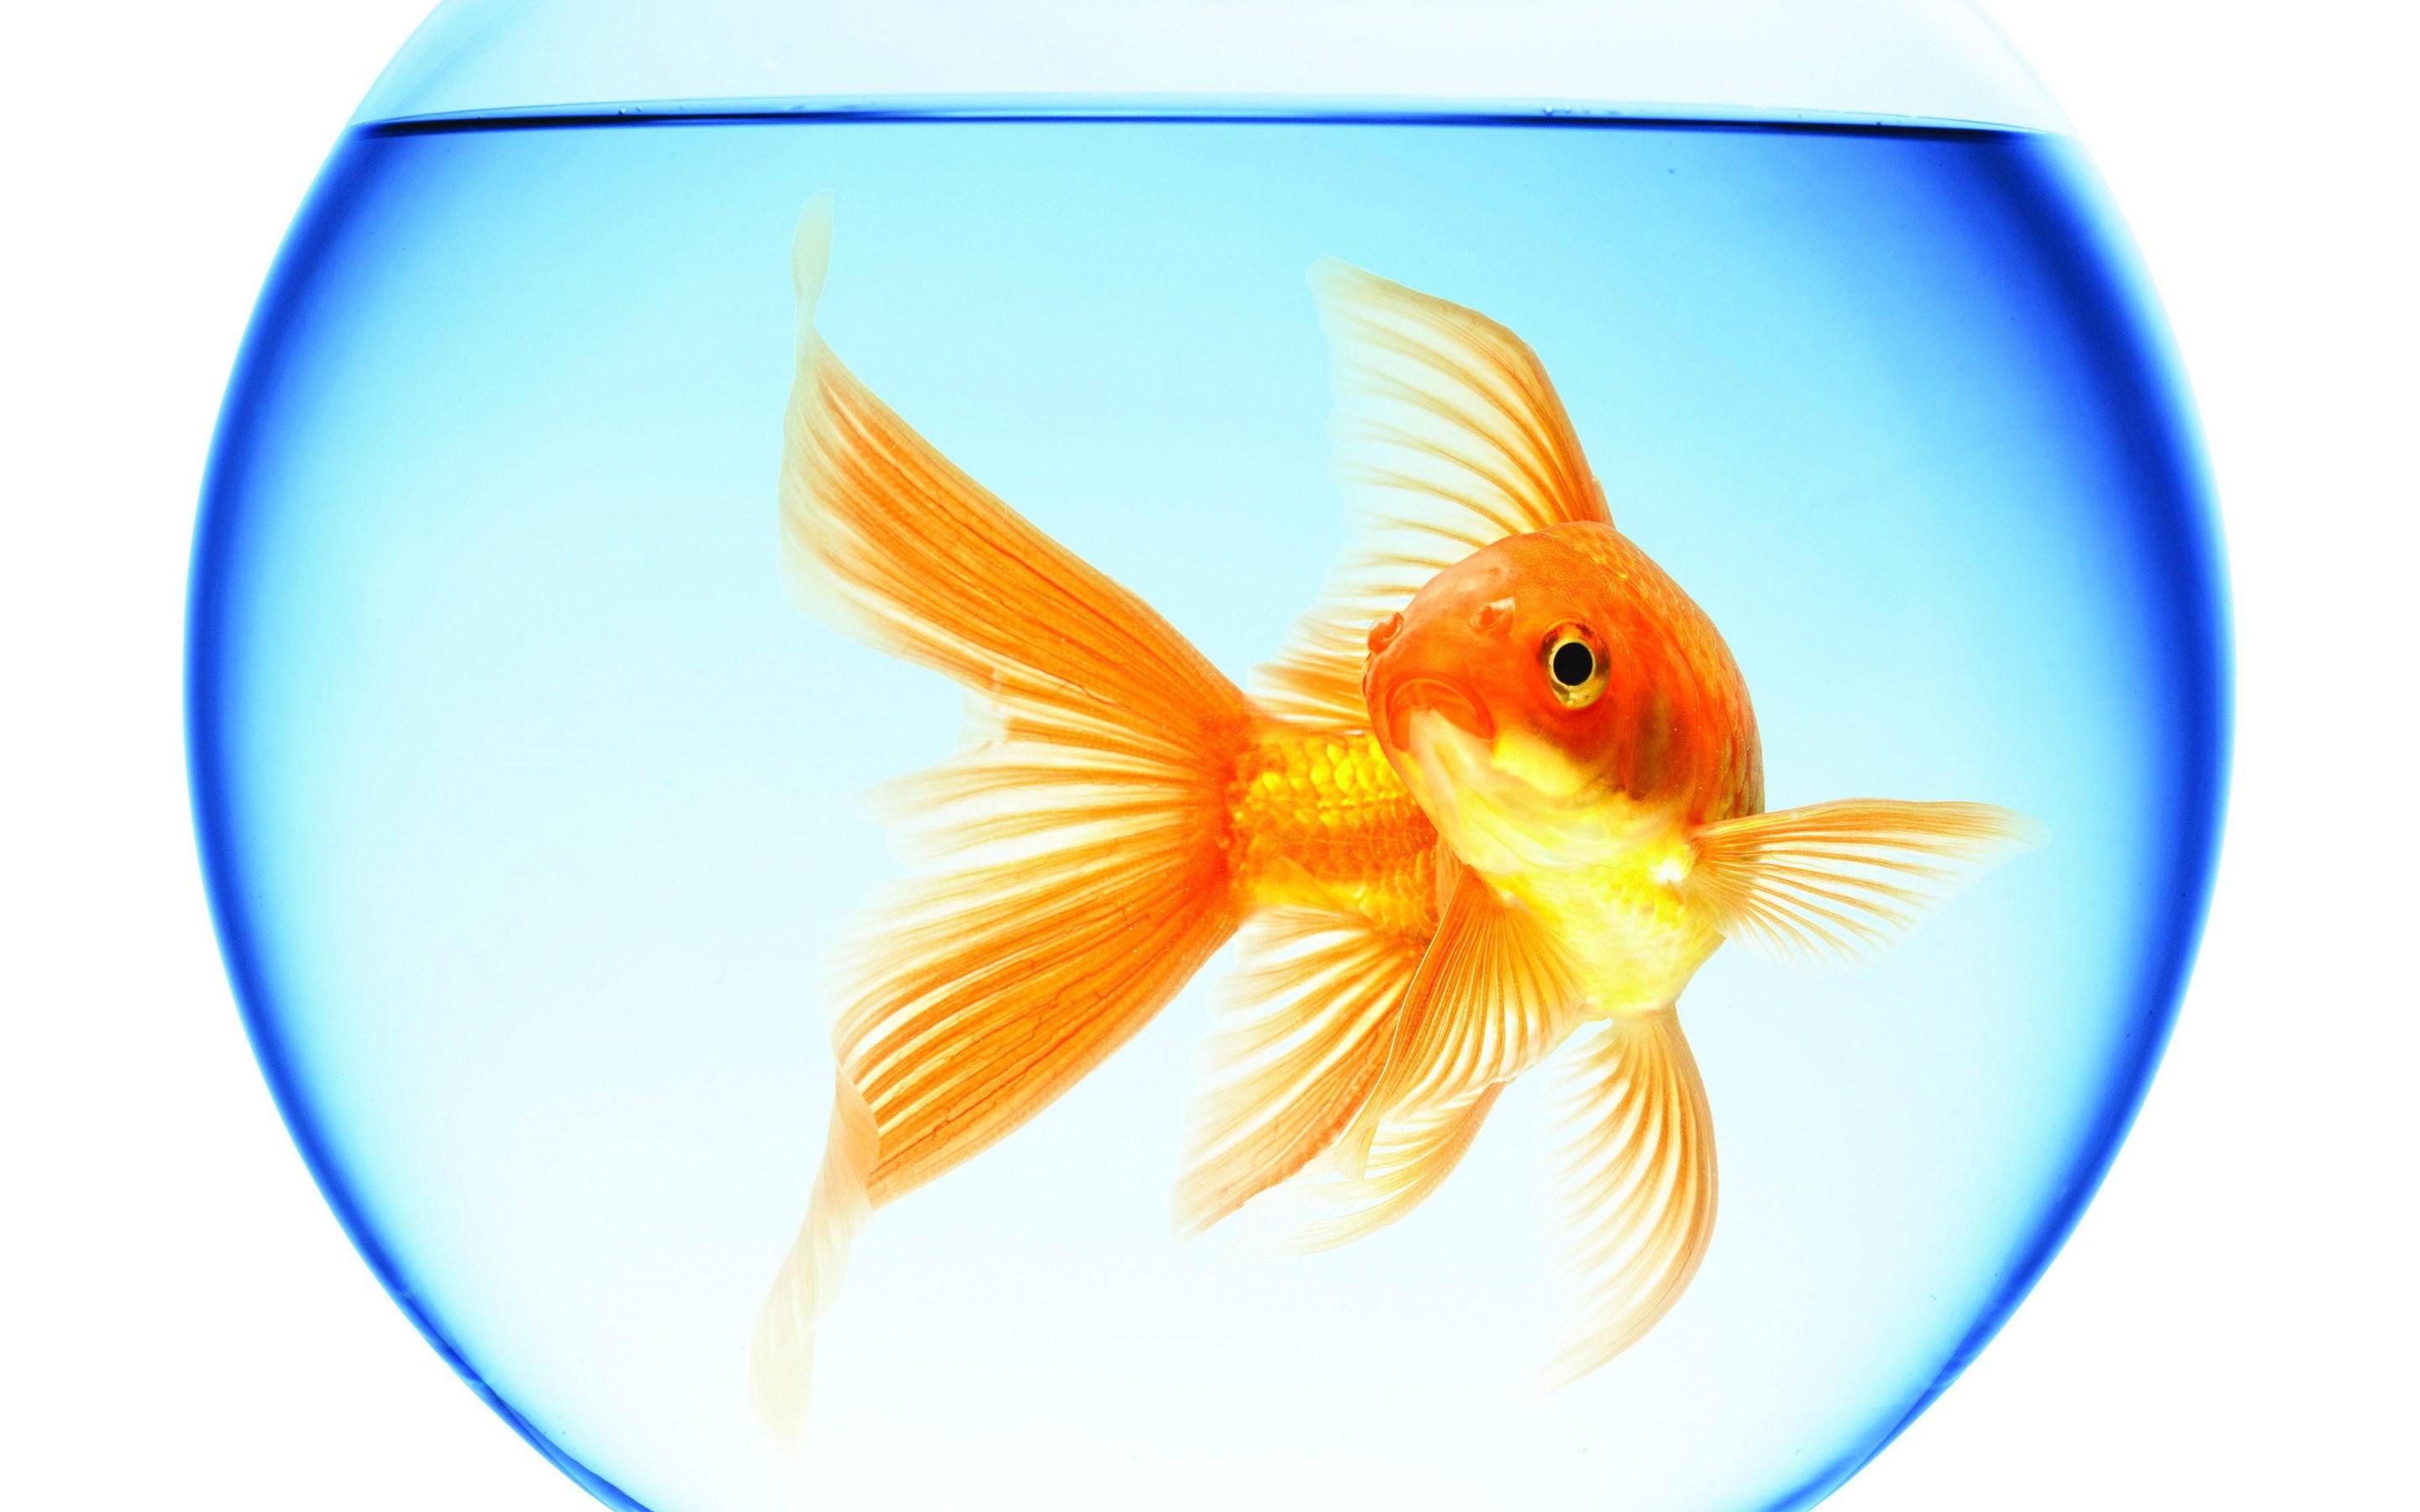 goldfish_swimming_aquarium_round_water_reflection_white_background_free_download-1 (1)